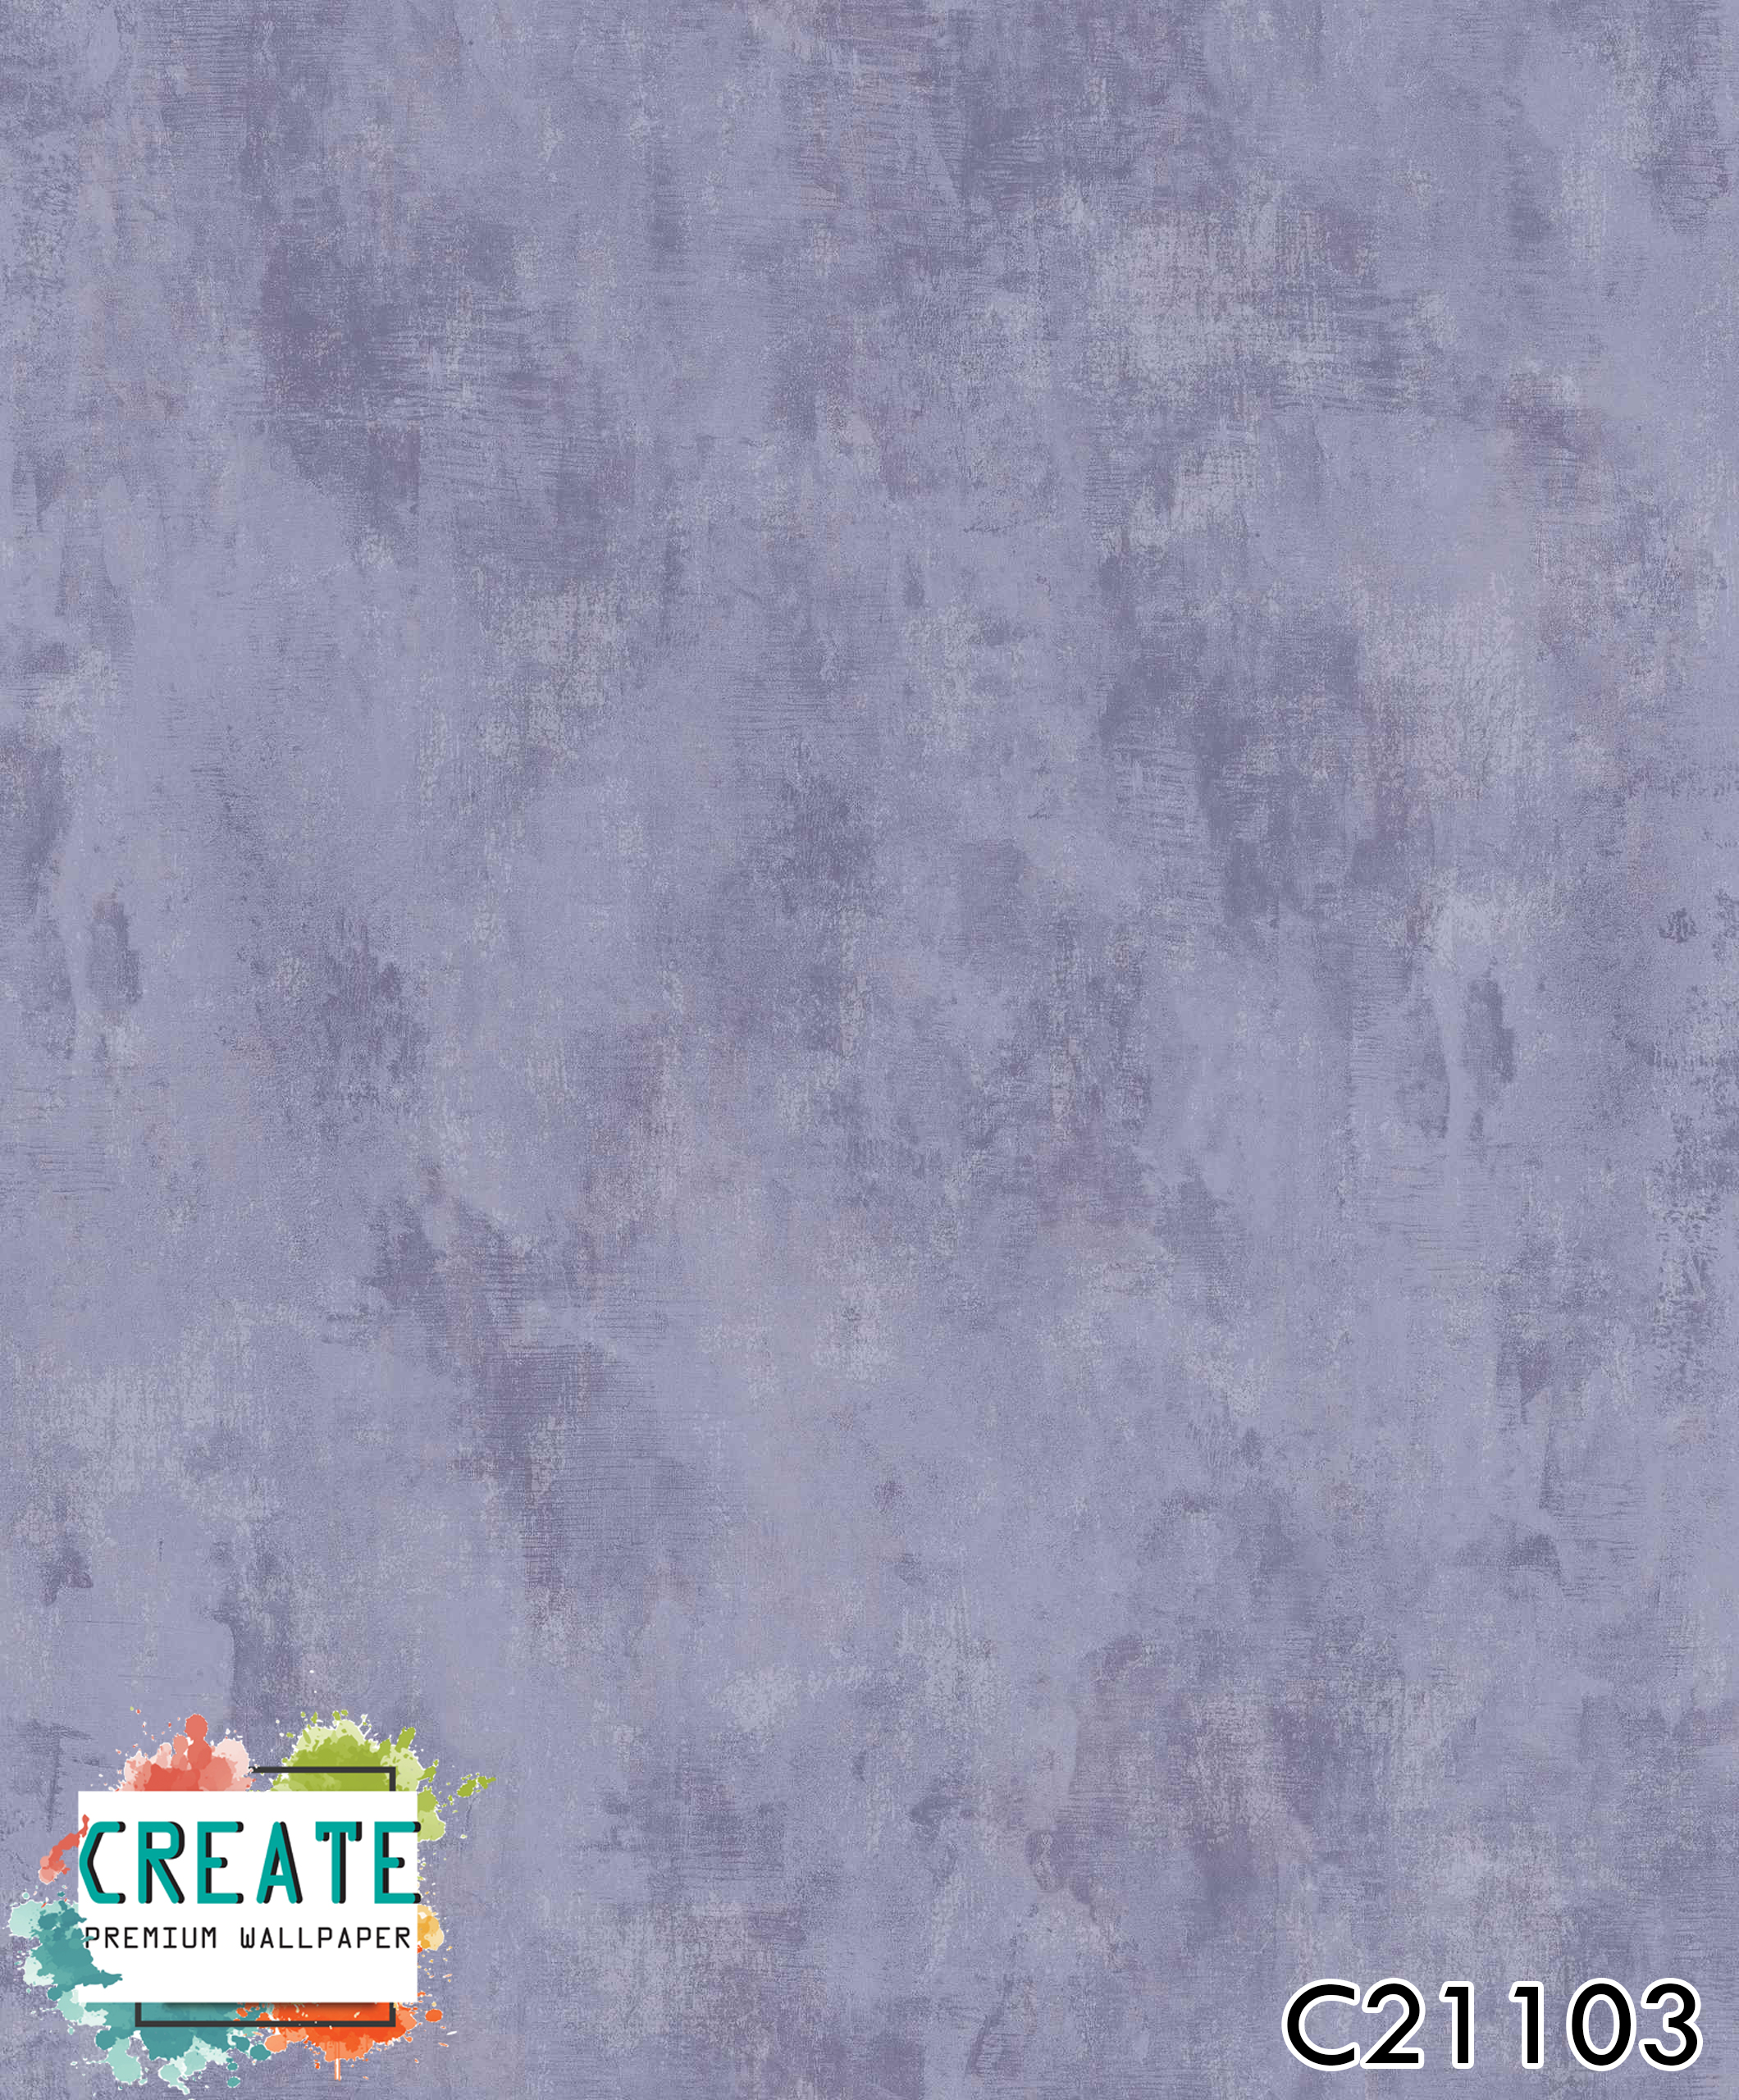 Wallpaper (CREATE) C21103